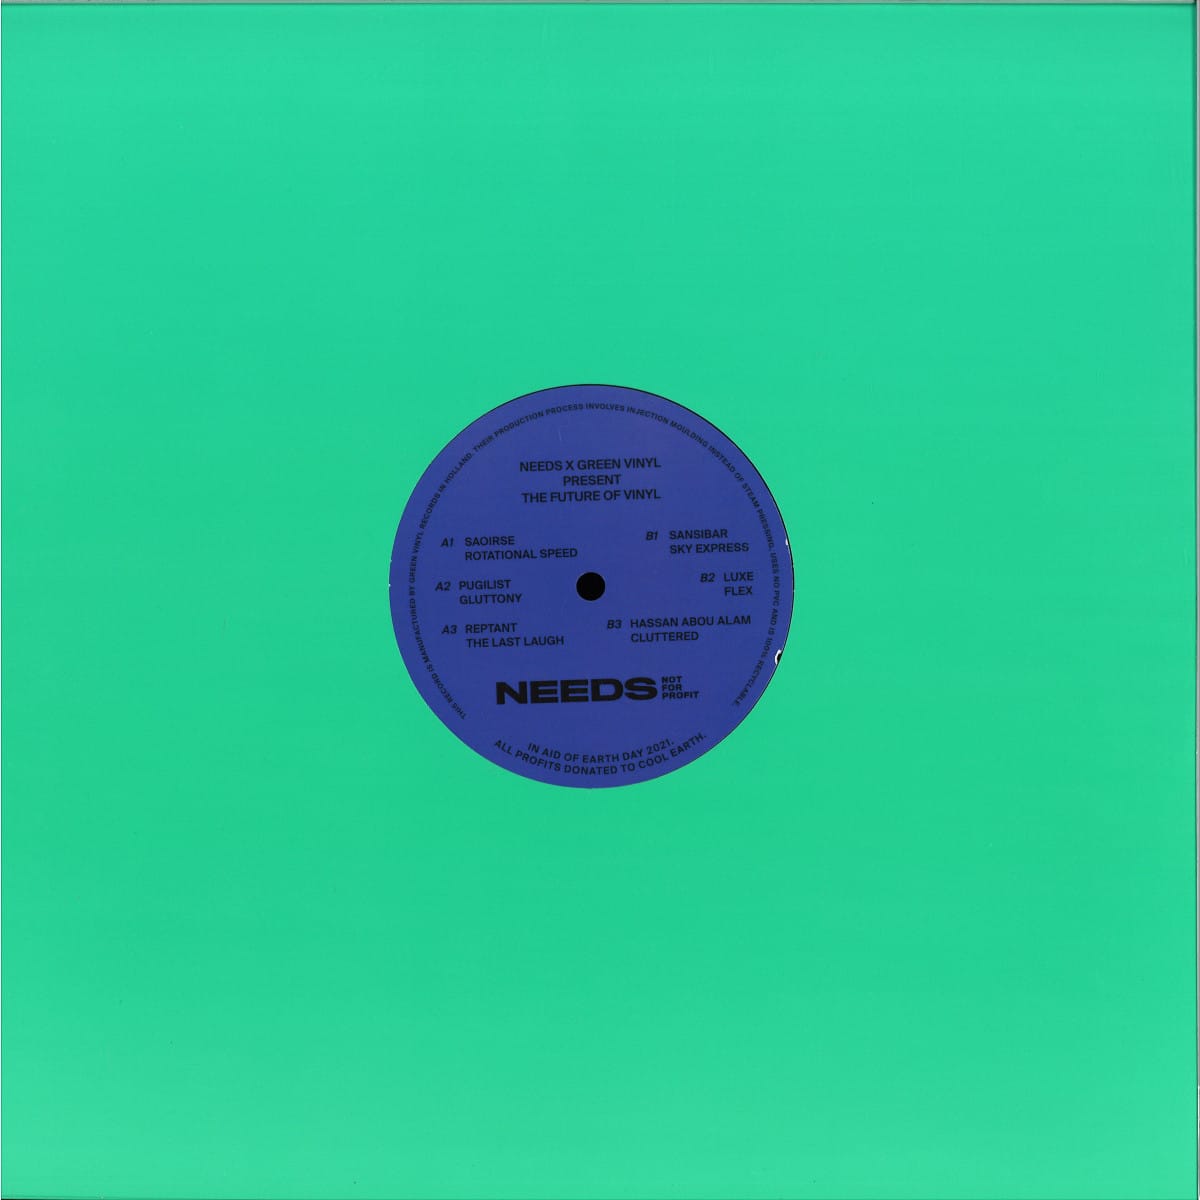 Various/Sansibar/Pugilist/Reptant/Saoirse/Luxe - Needs x Green Vinyl present The Future Of Vinyl - NEEDS009 - NEEDS NOT FOR PROFIT